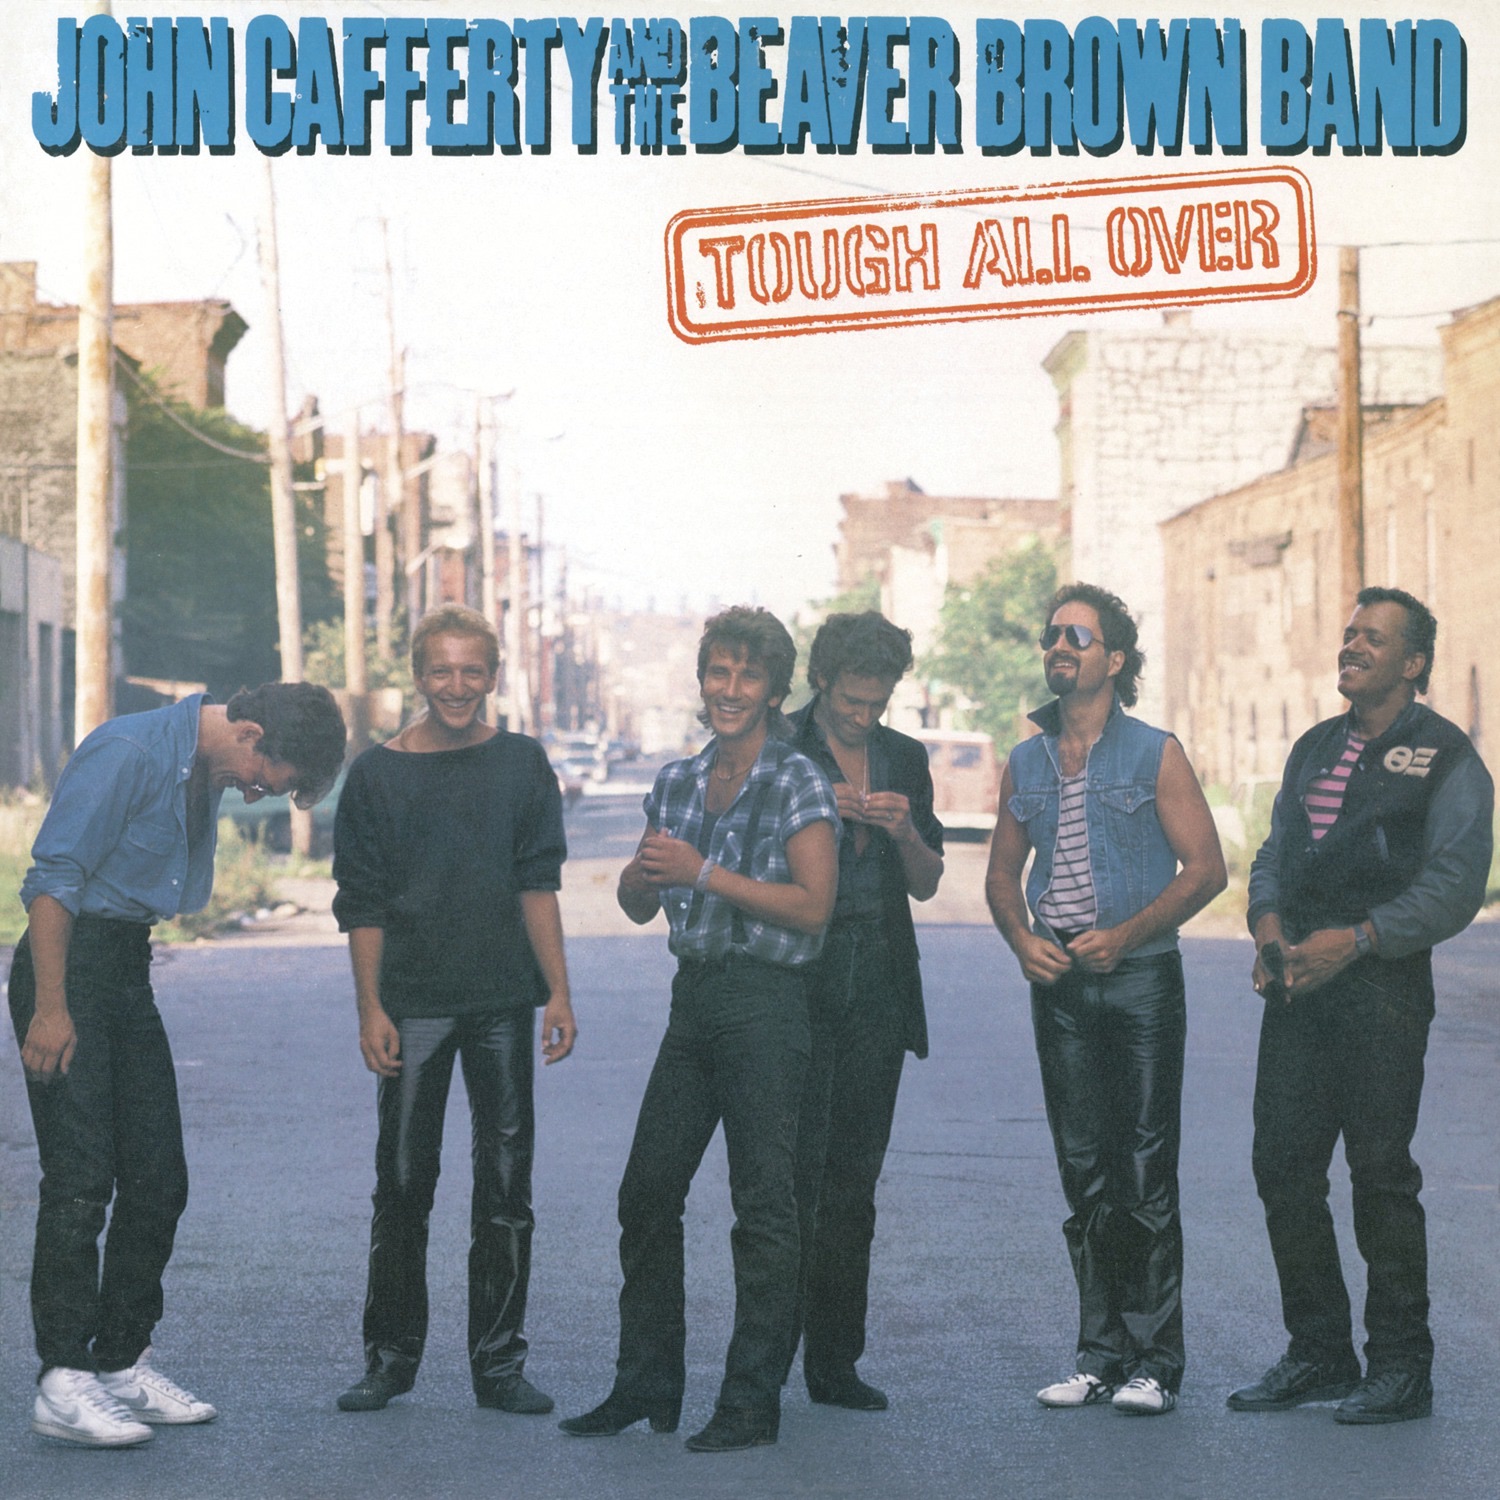 cafferty john beaver band brown eddie tough album cruisers cd play 1985